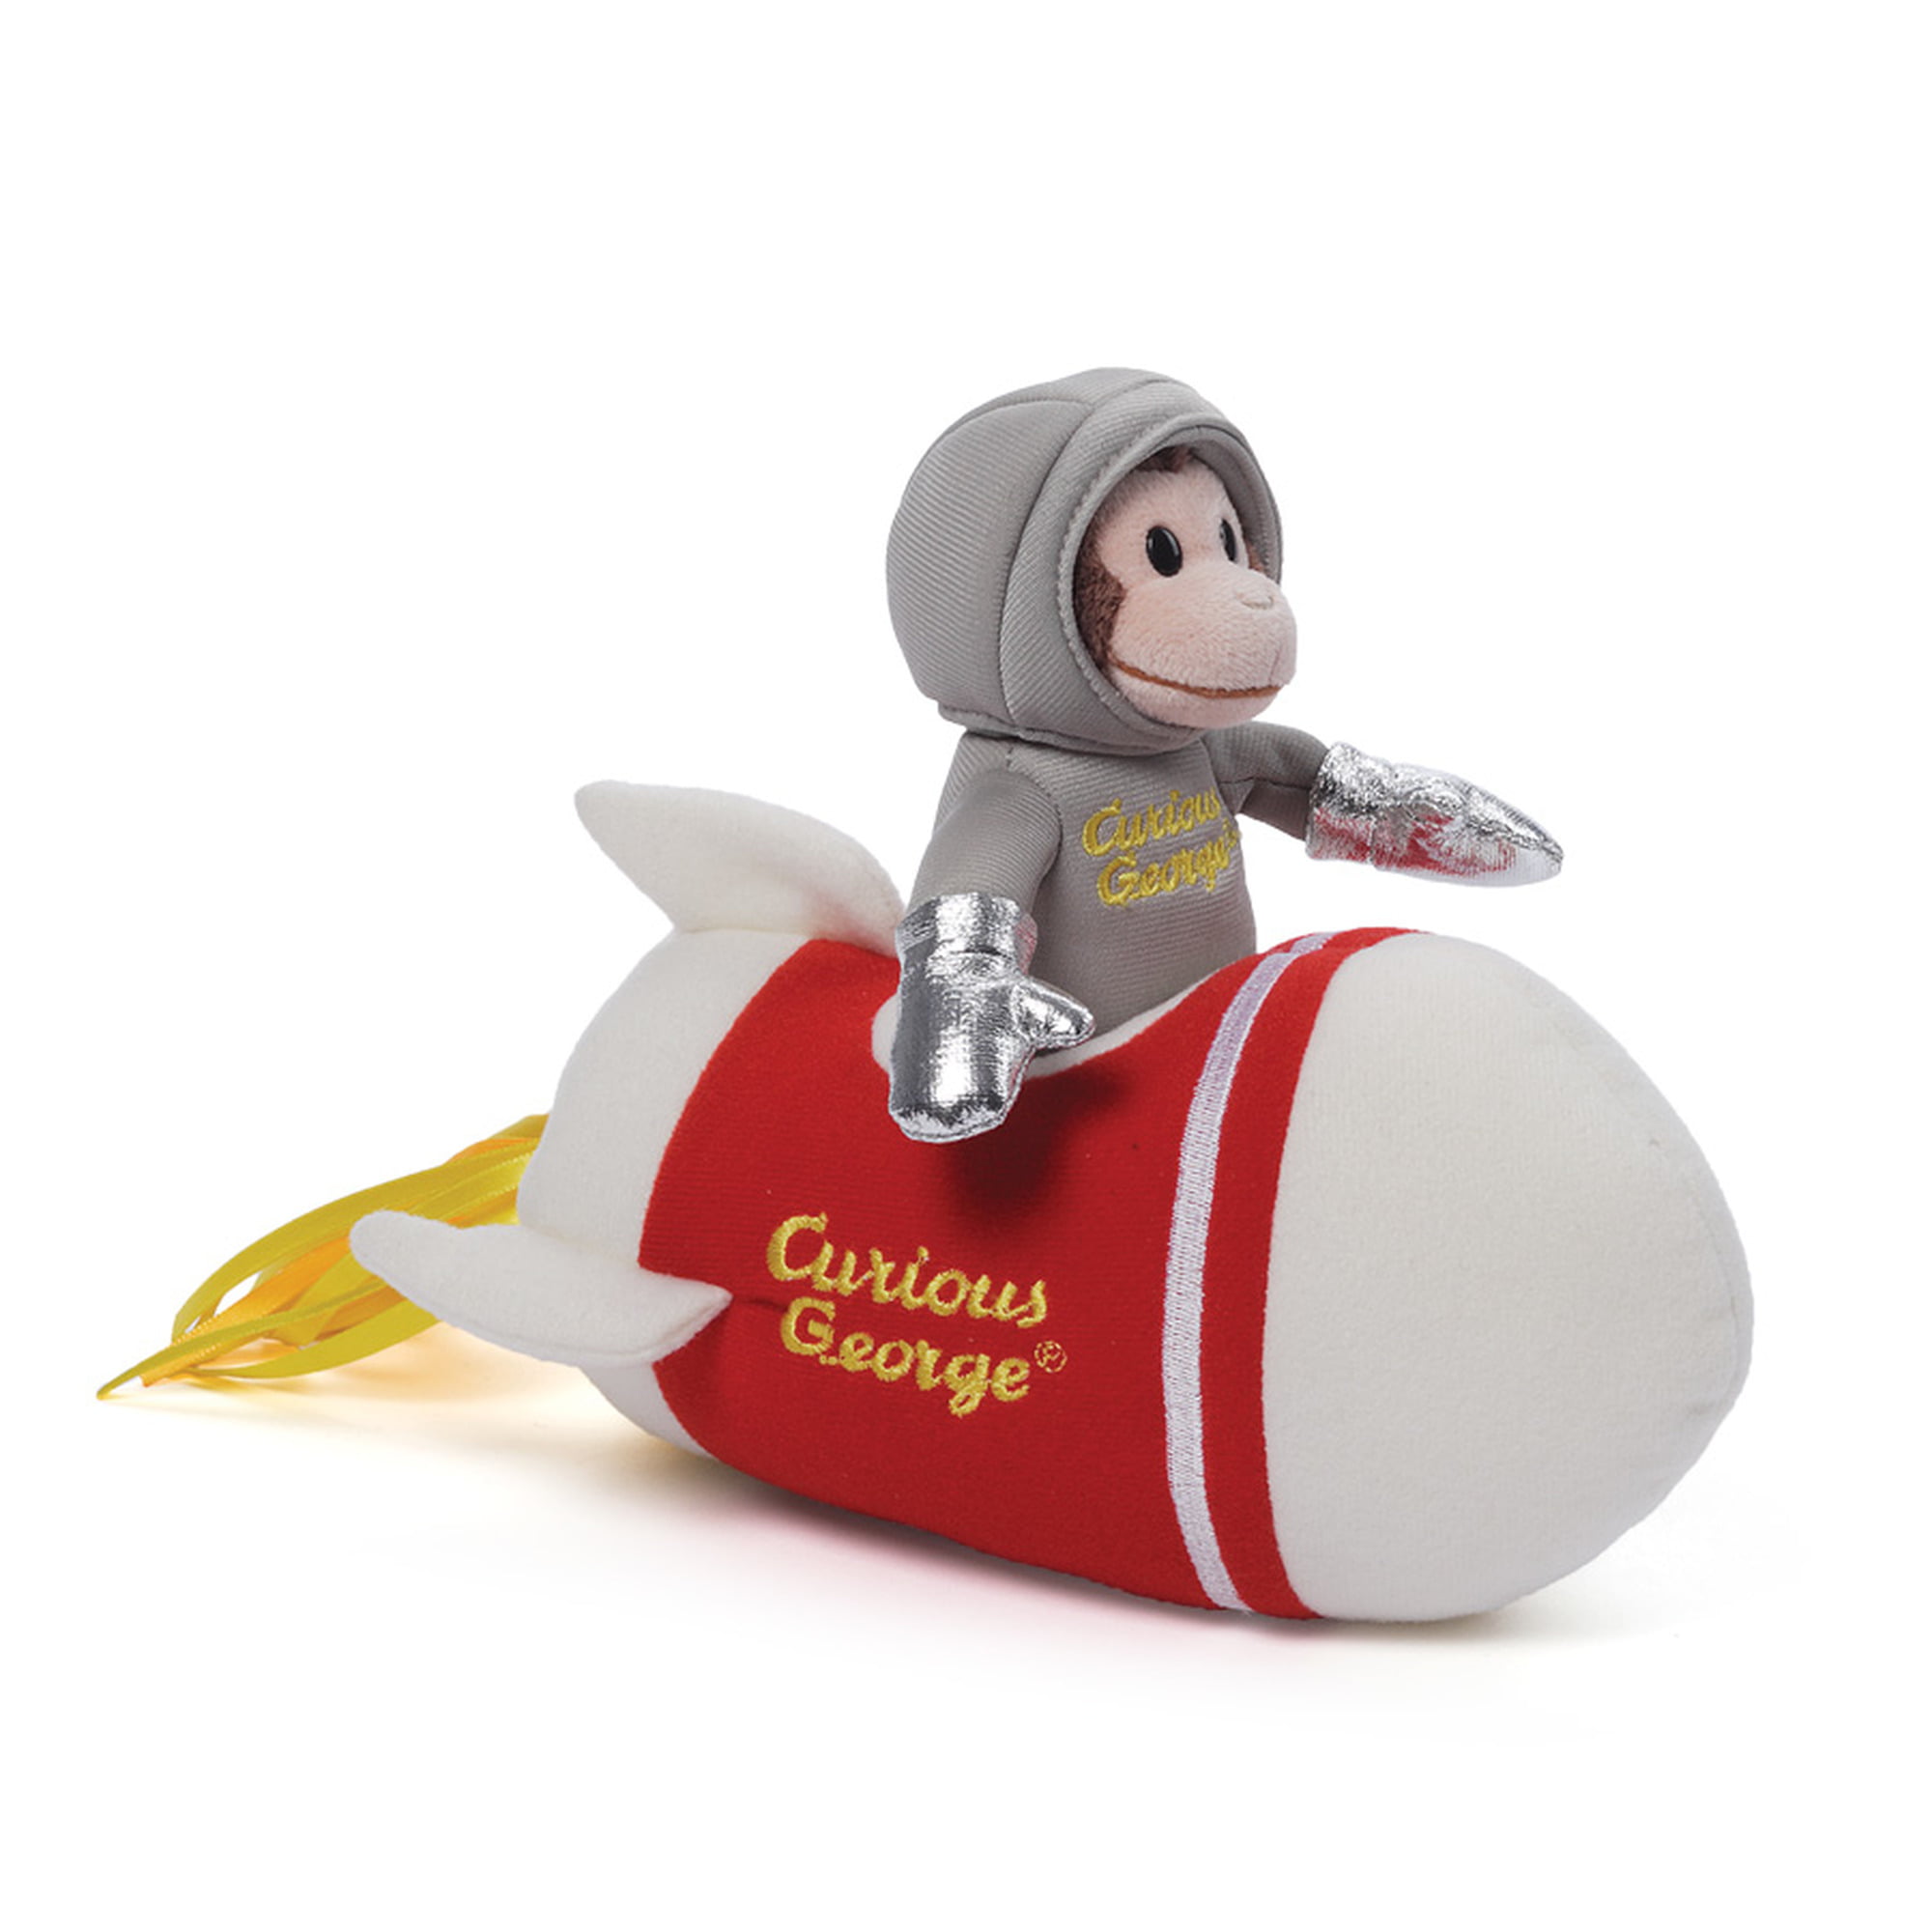 rocket ship toy walmart